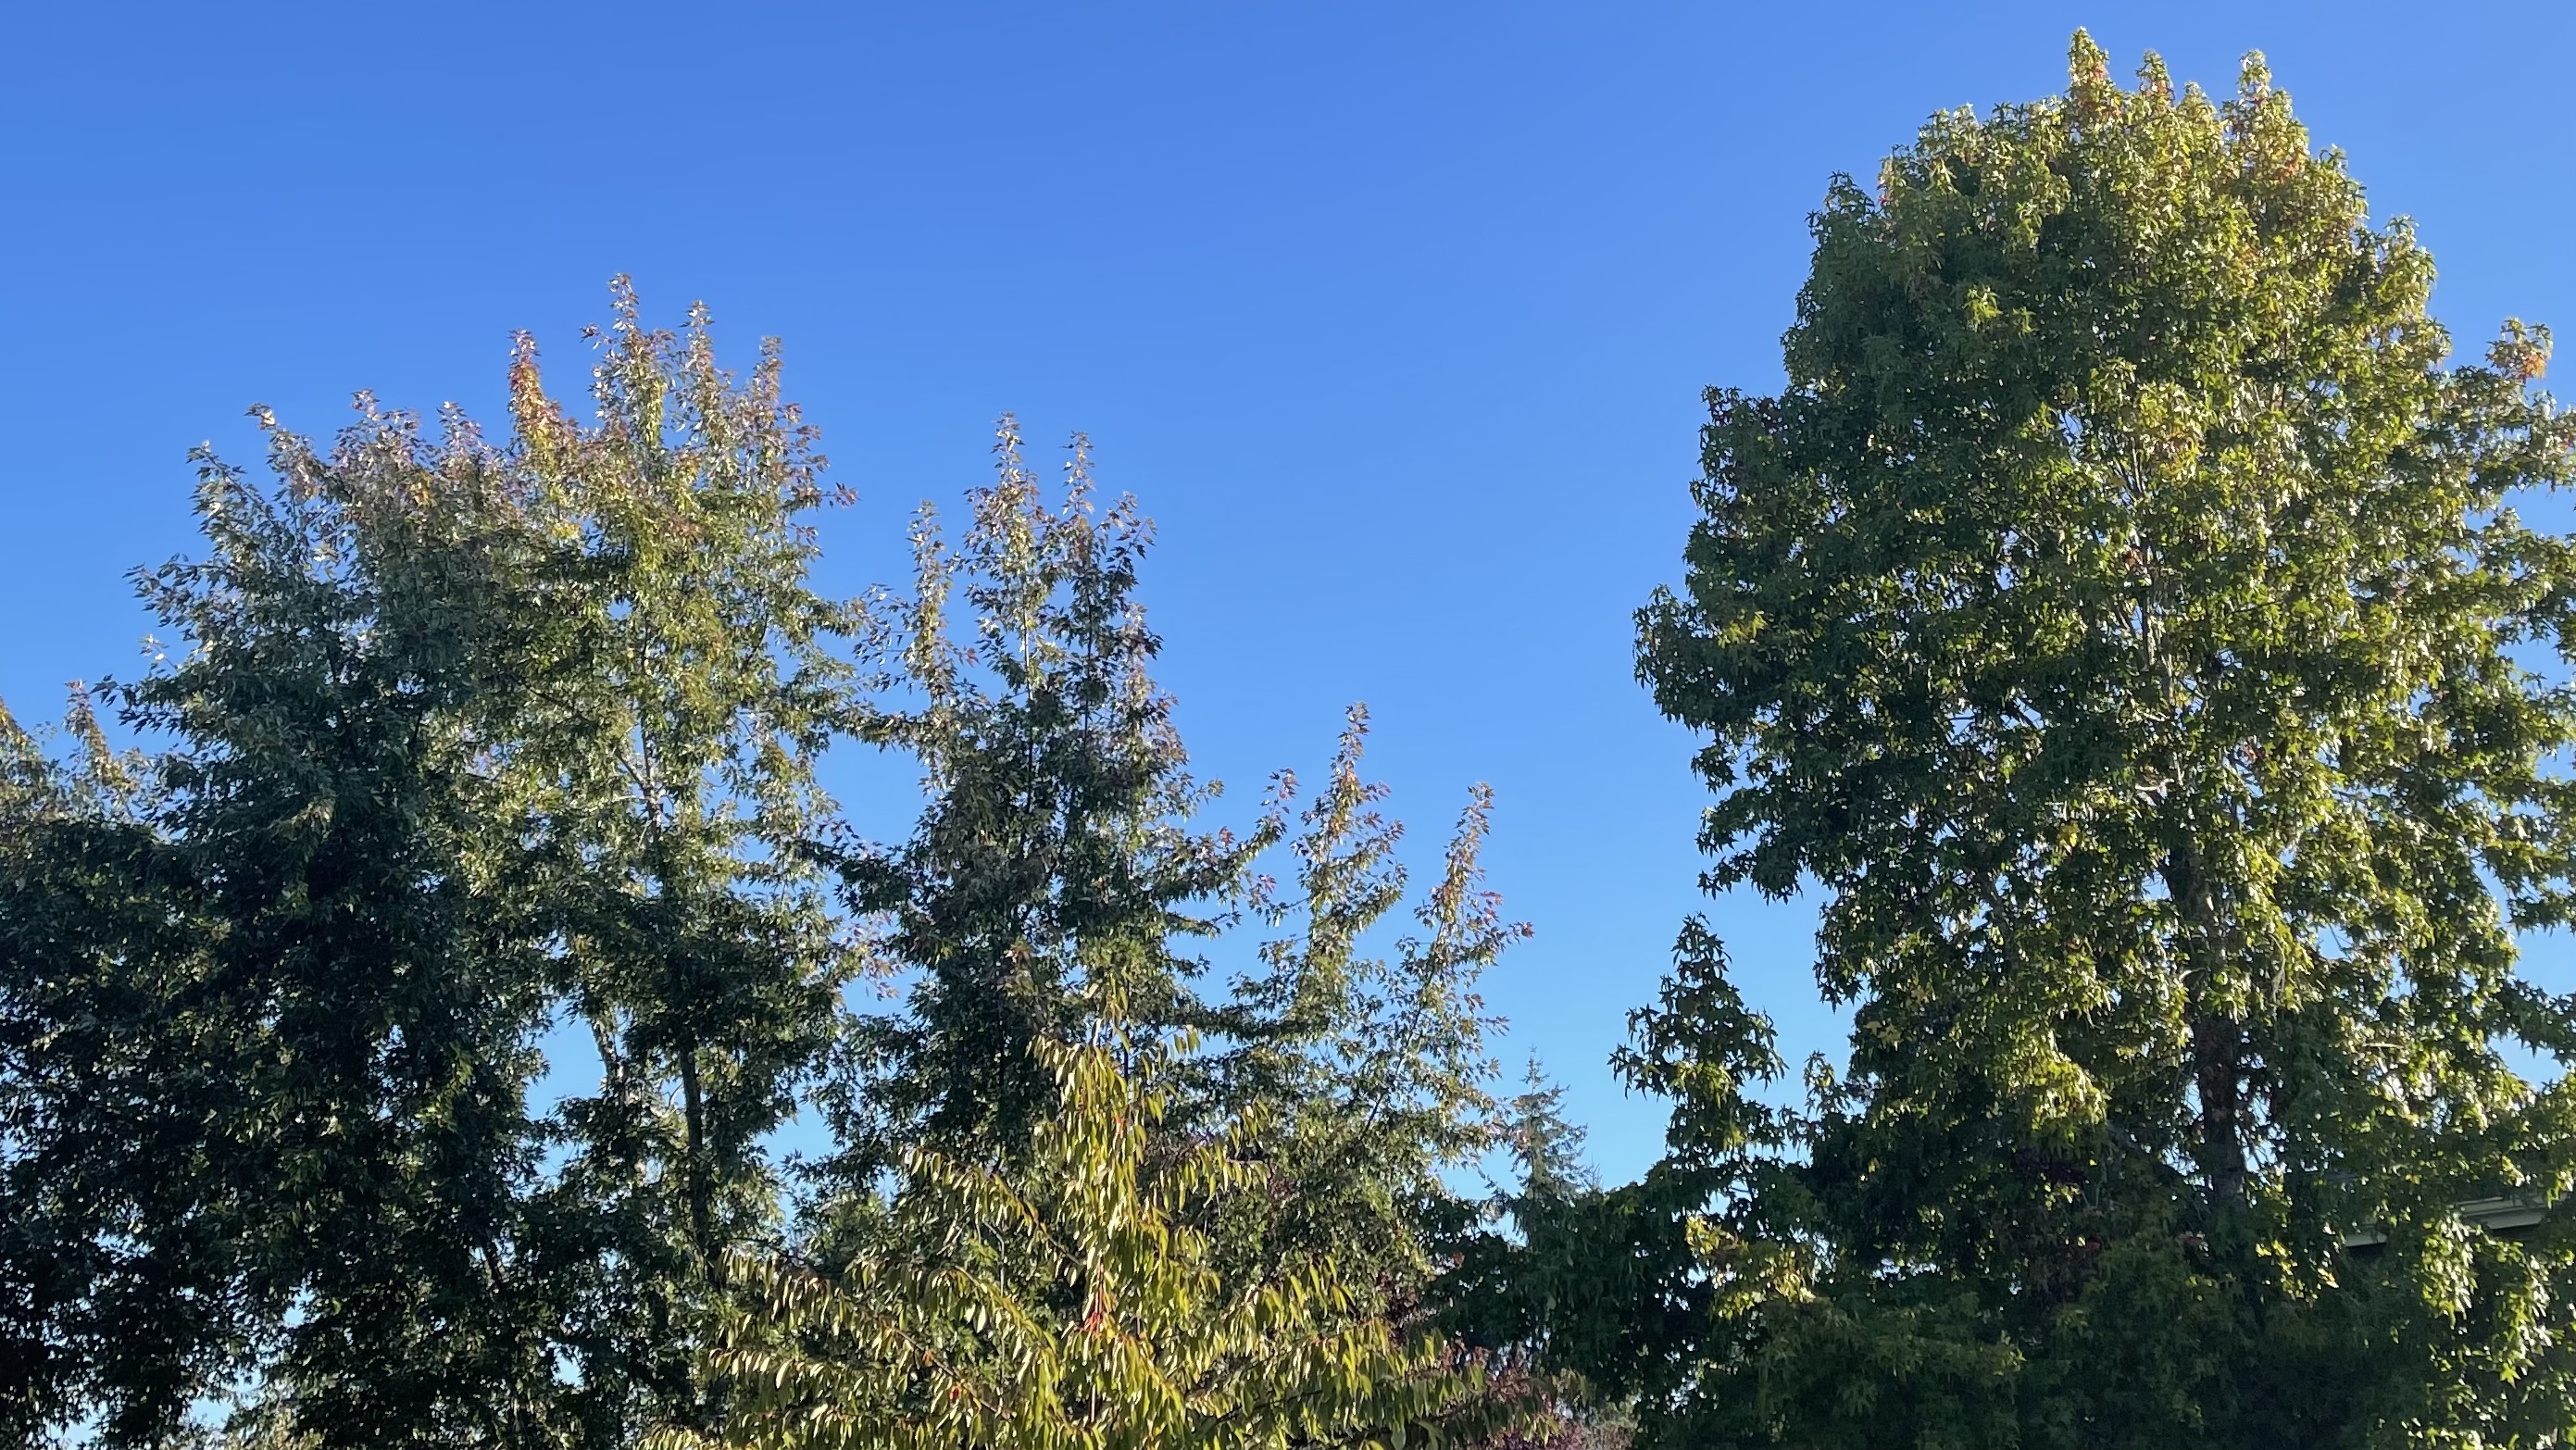 trees against a blue sky